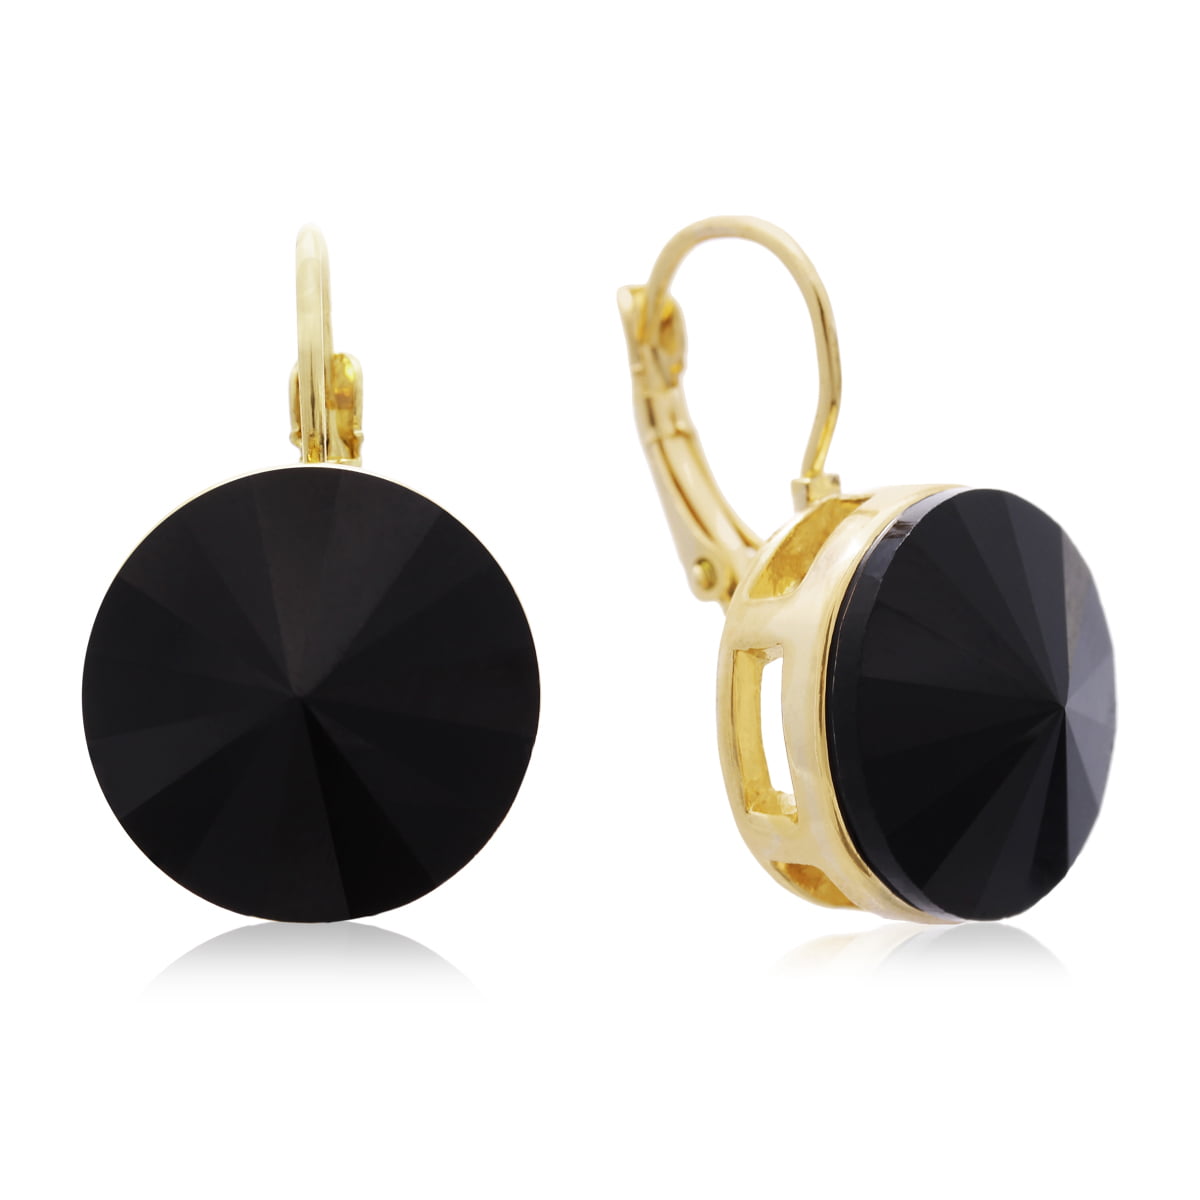 Details about   Round Shape Designer 925 Silver Black Onyx Gemstone Stud Earrings Jewelry 